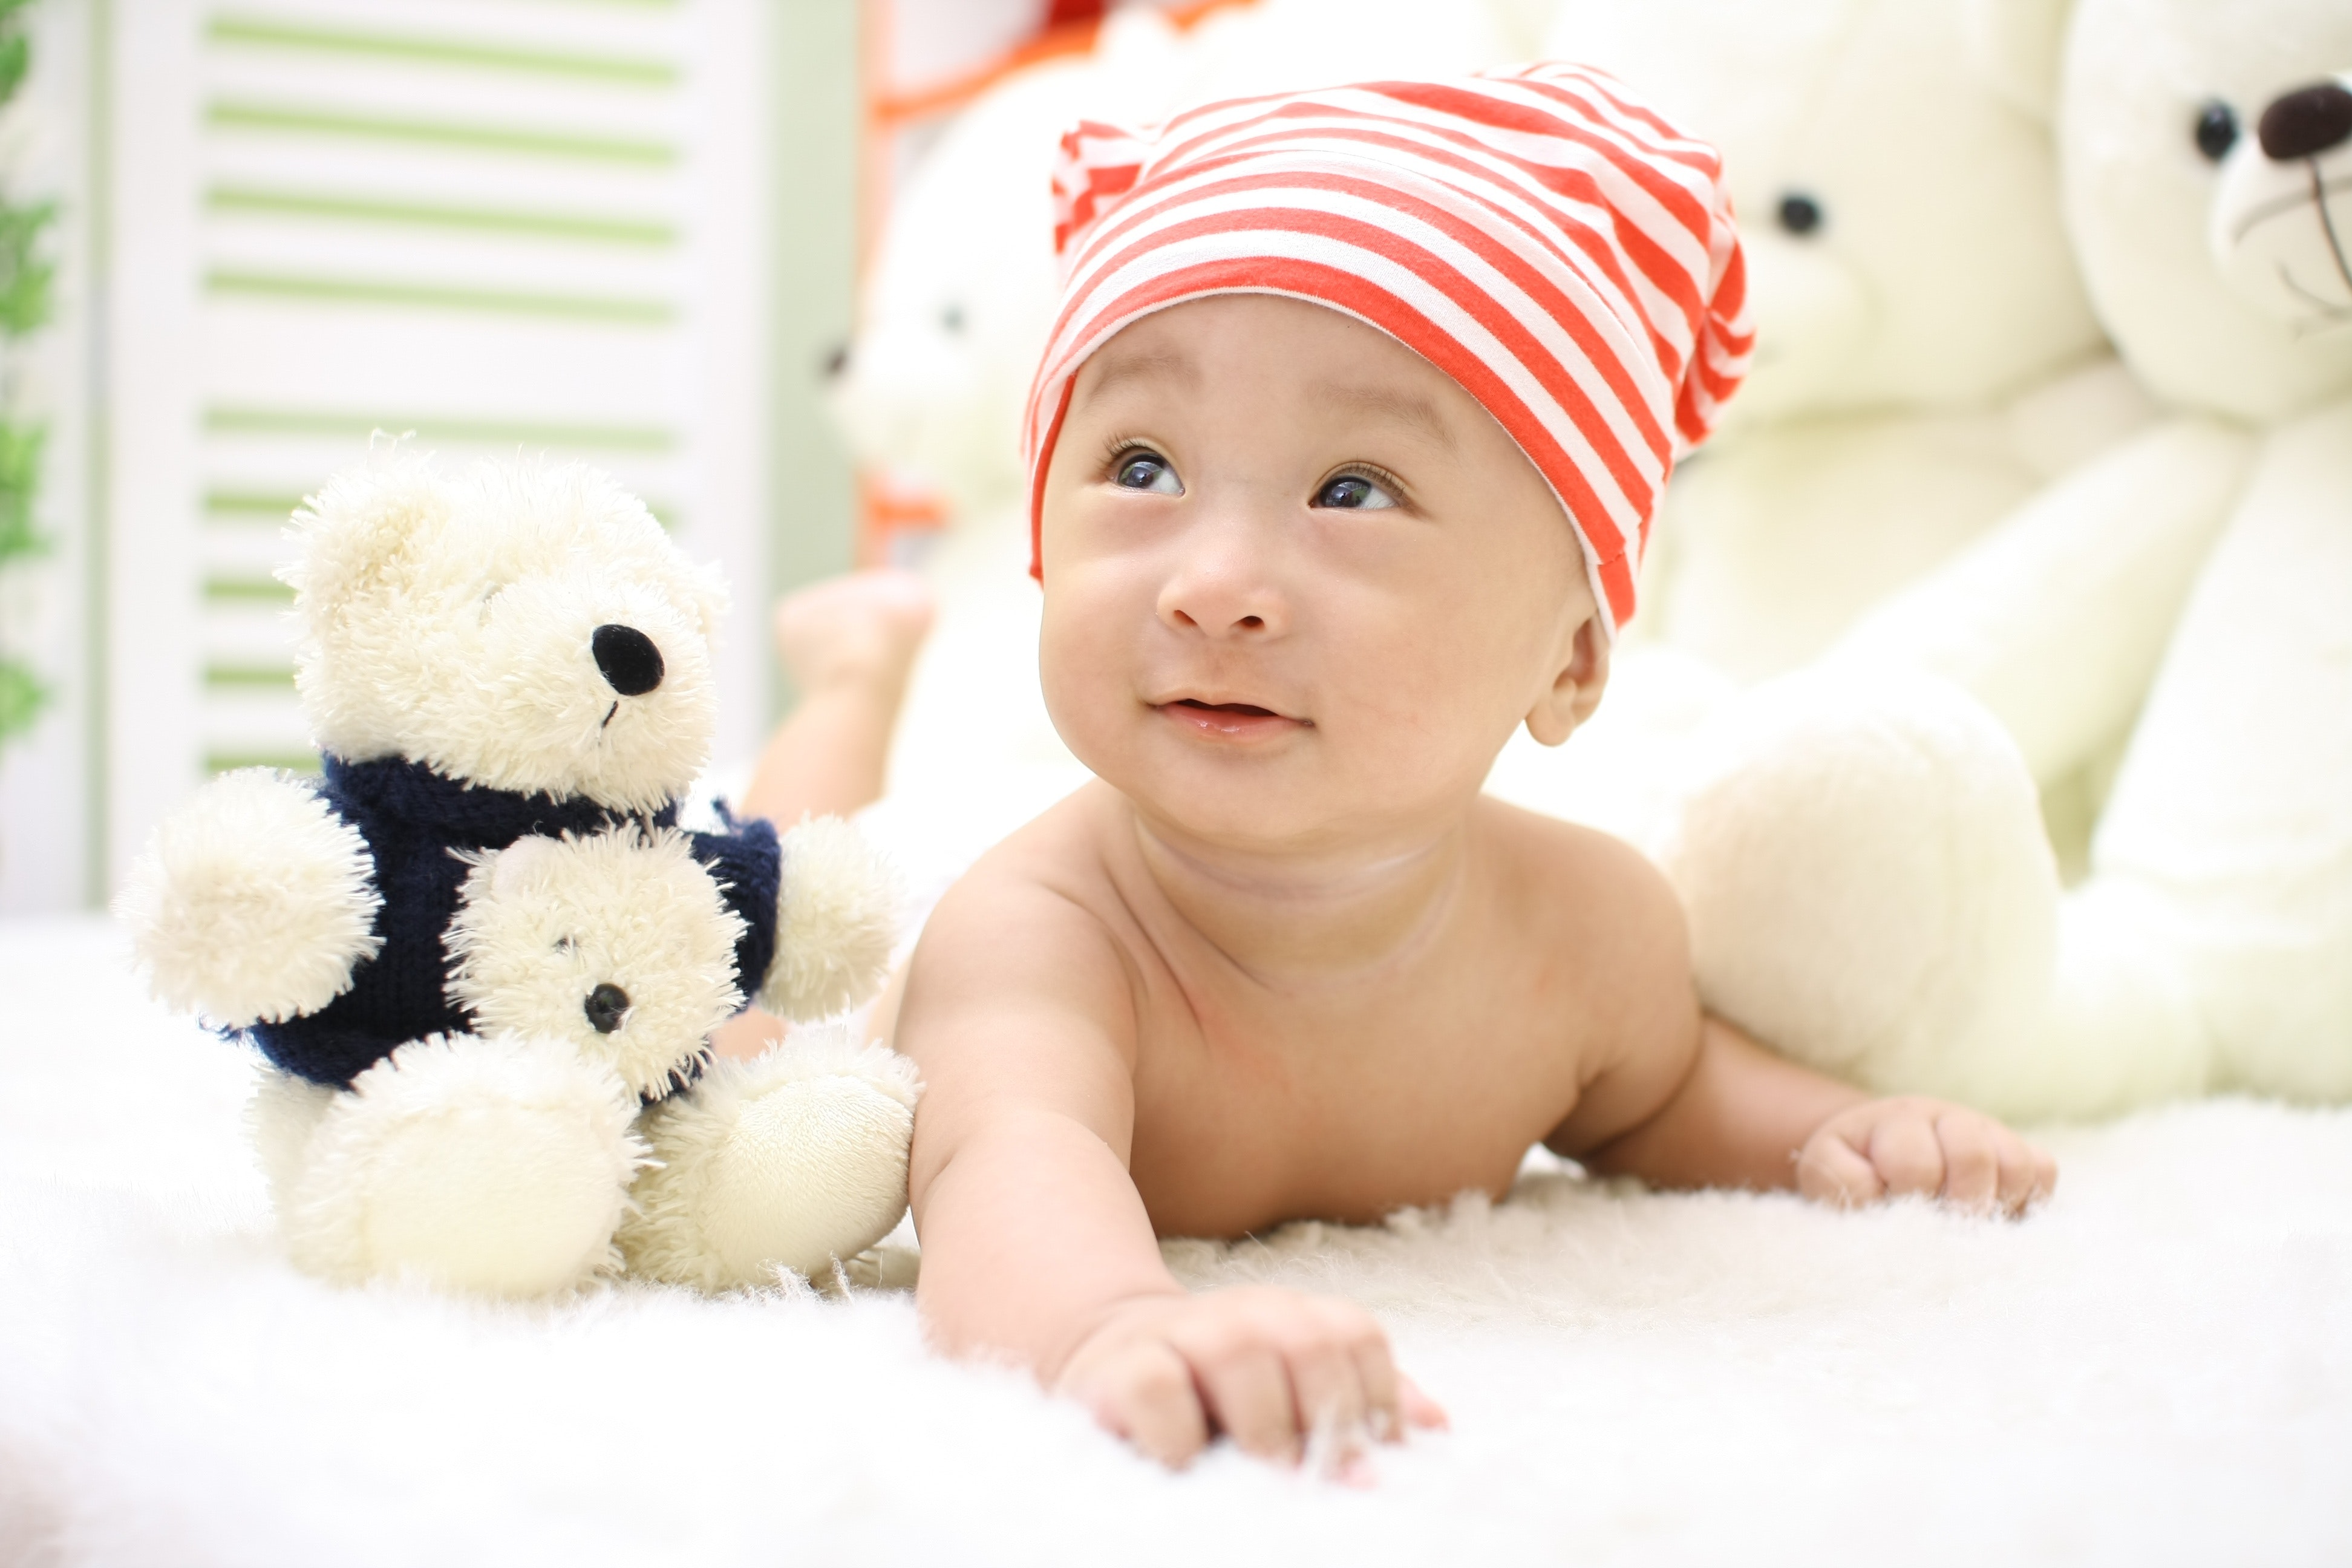 Smiling toddler wearing orange and white knit cap beside black and white bear plush toy photo